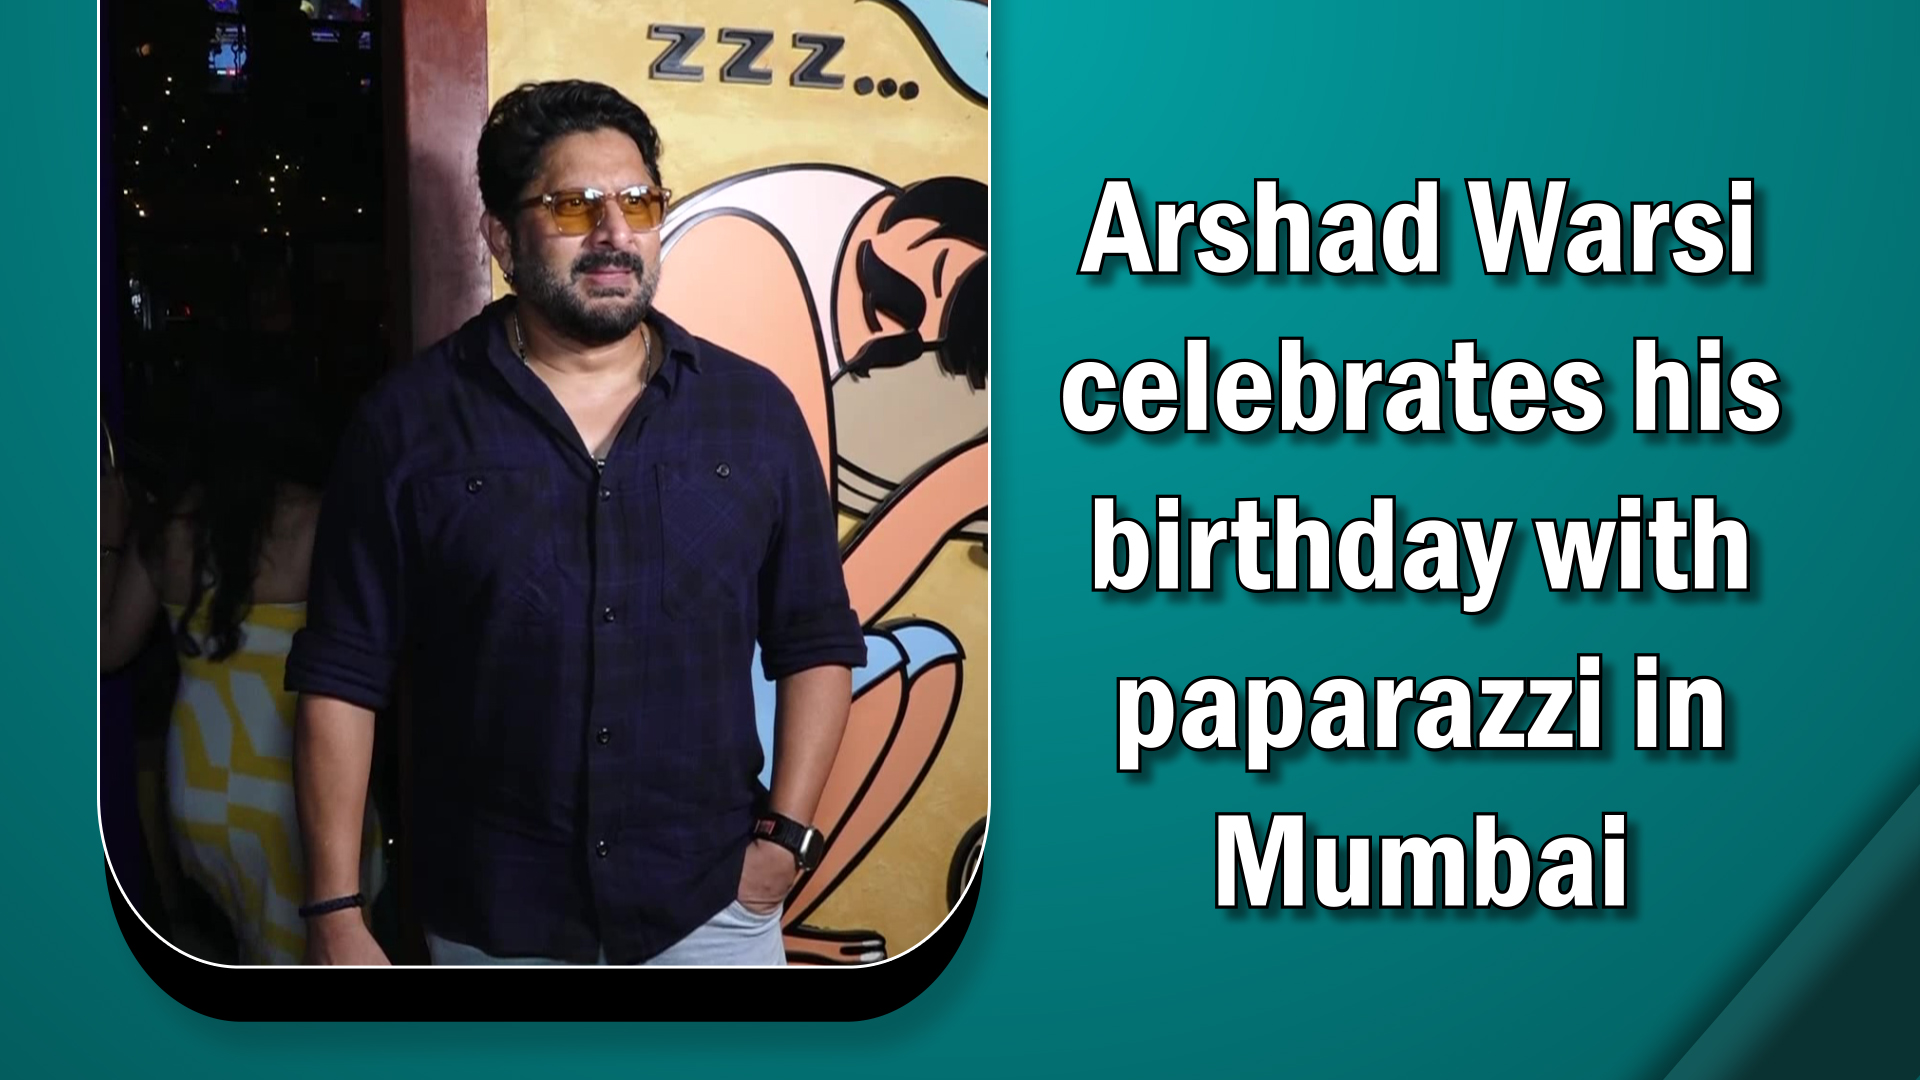 Arshad Warsi celebrates his birthday with paparazzi in Mumbai